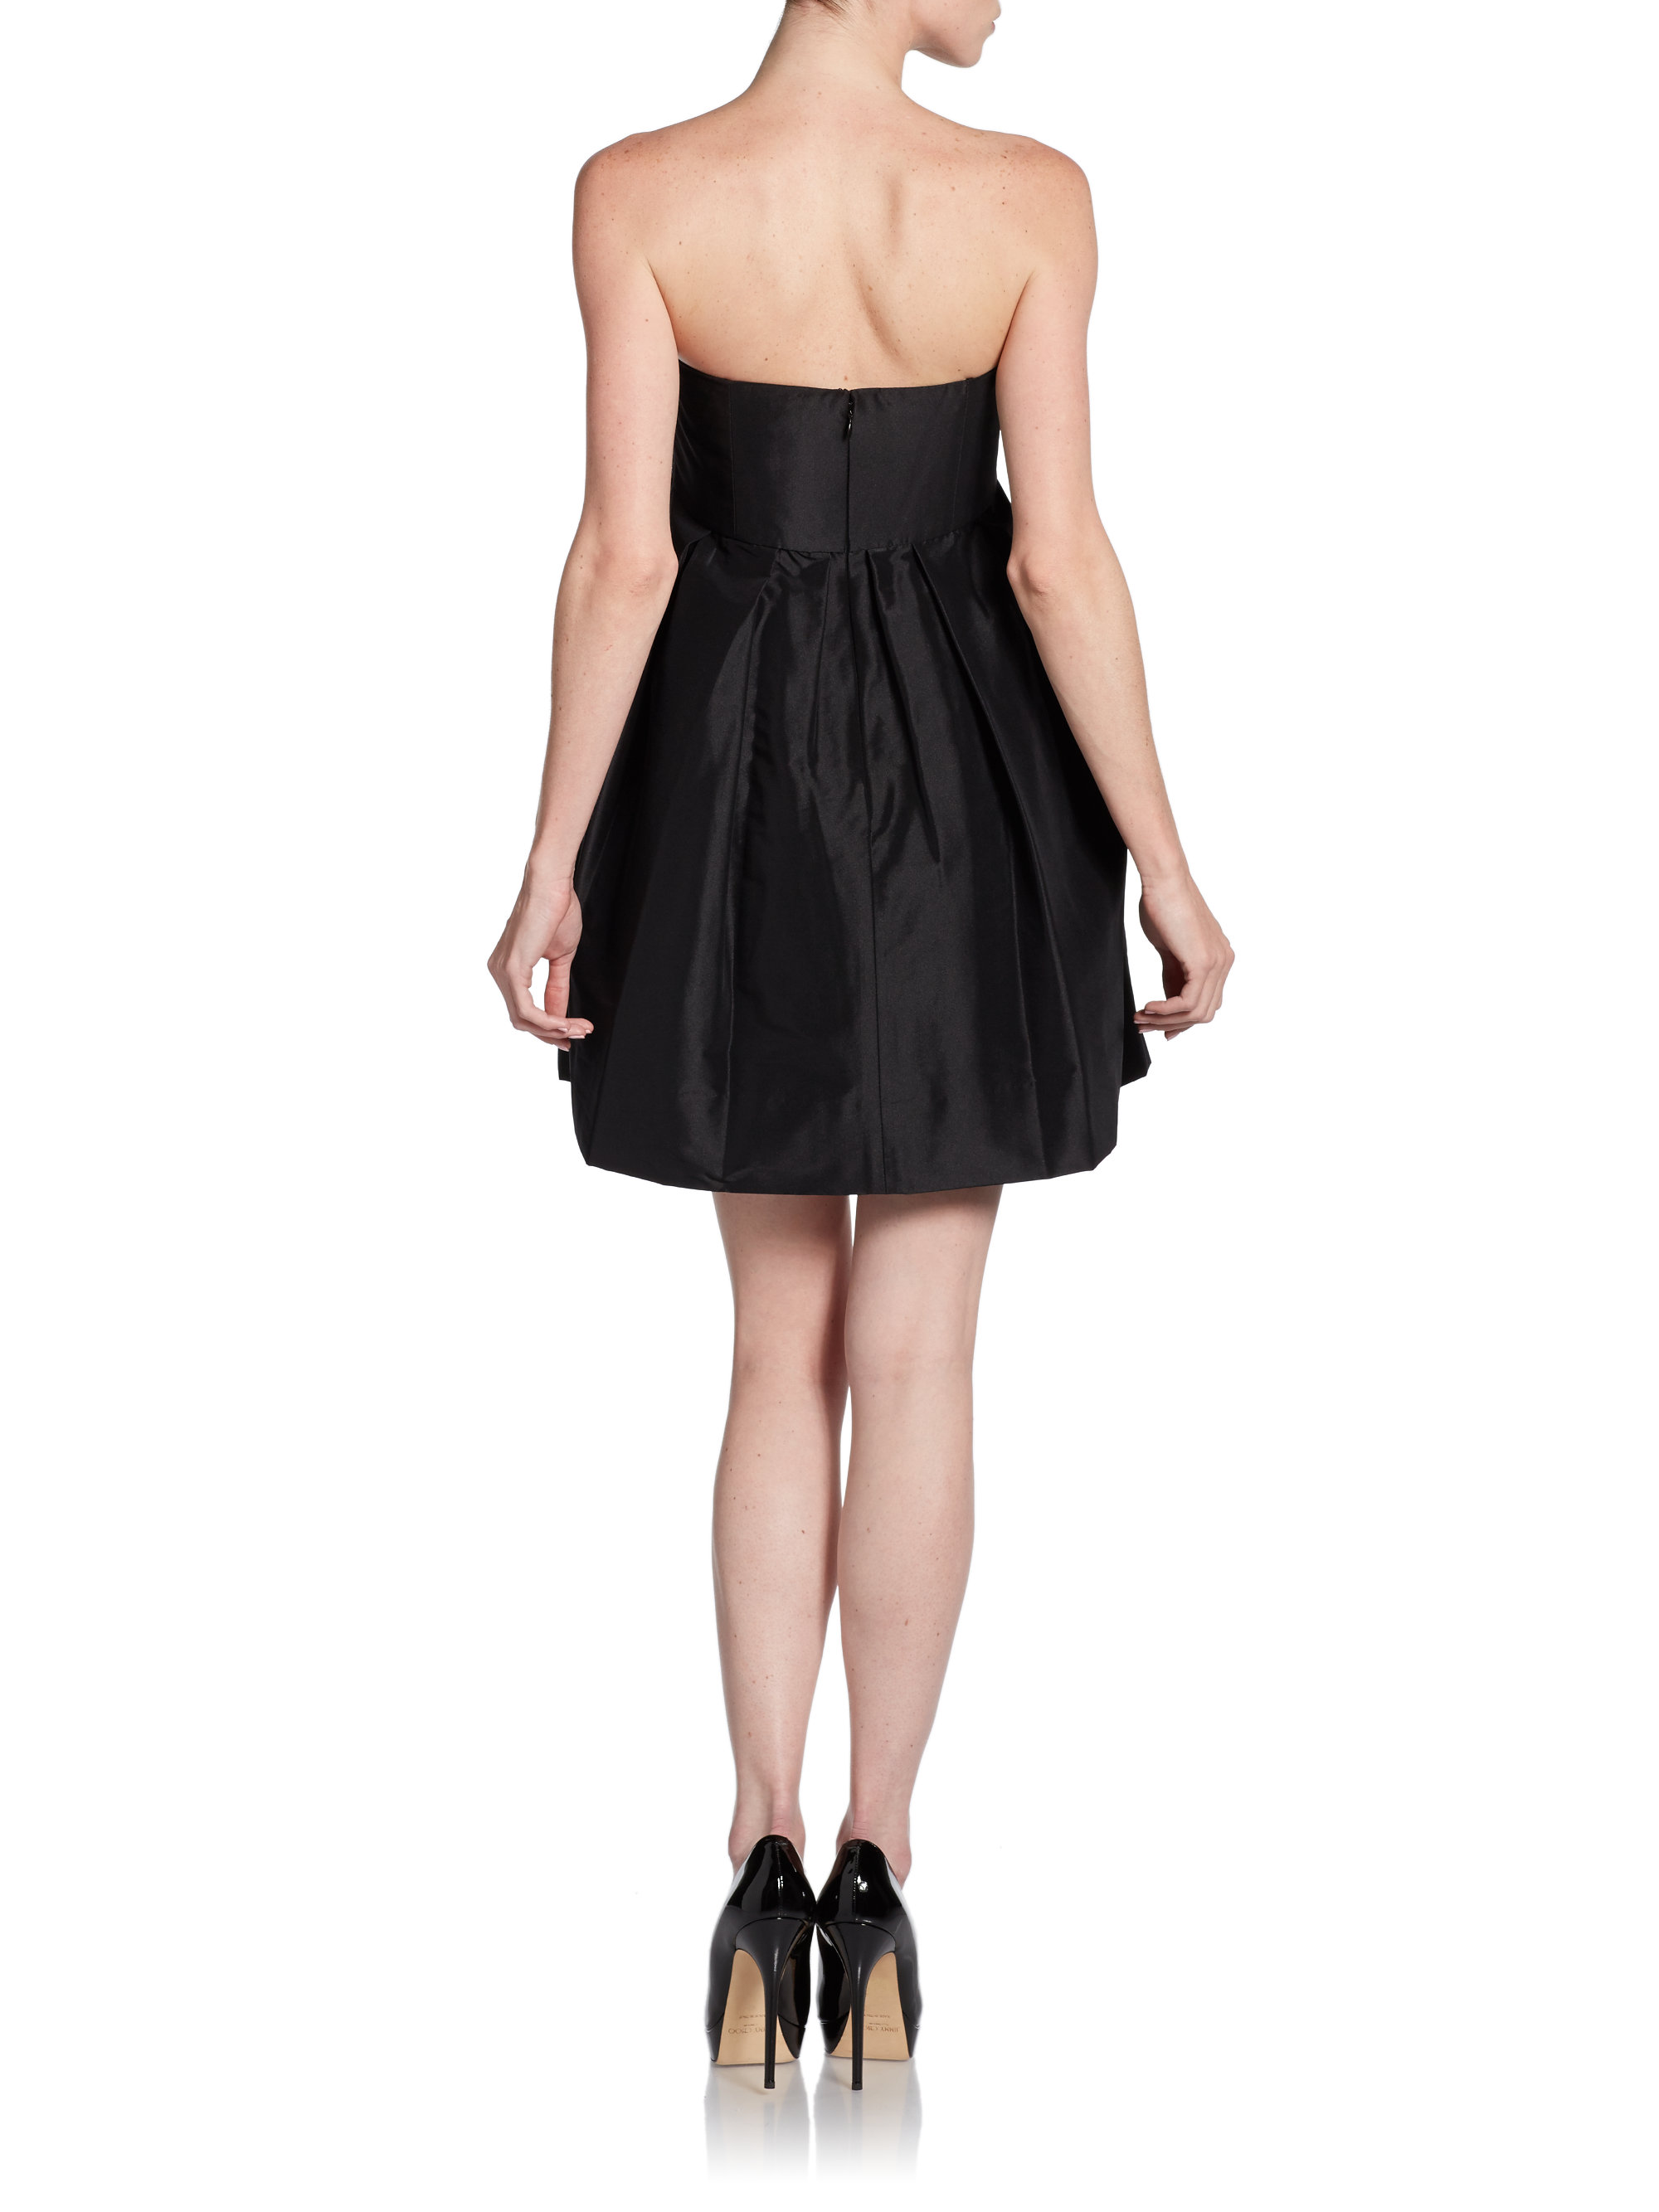 Lyst - Jill Stuart Strapless Bow Front Babydoll Dress in Black